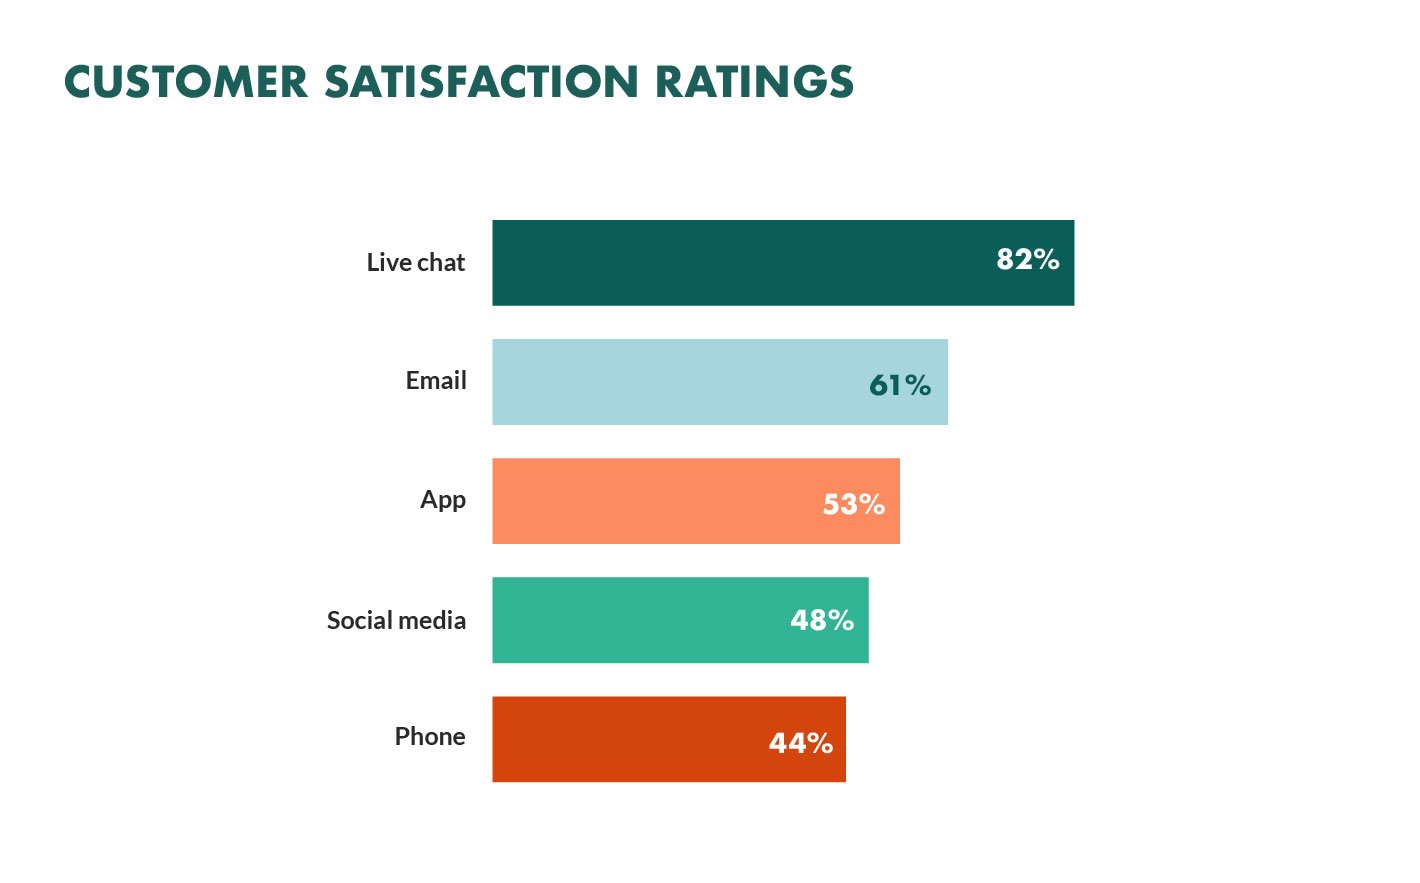 Customer satisfaction ratings